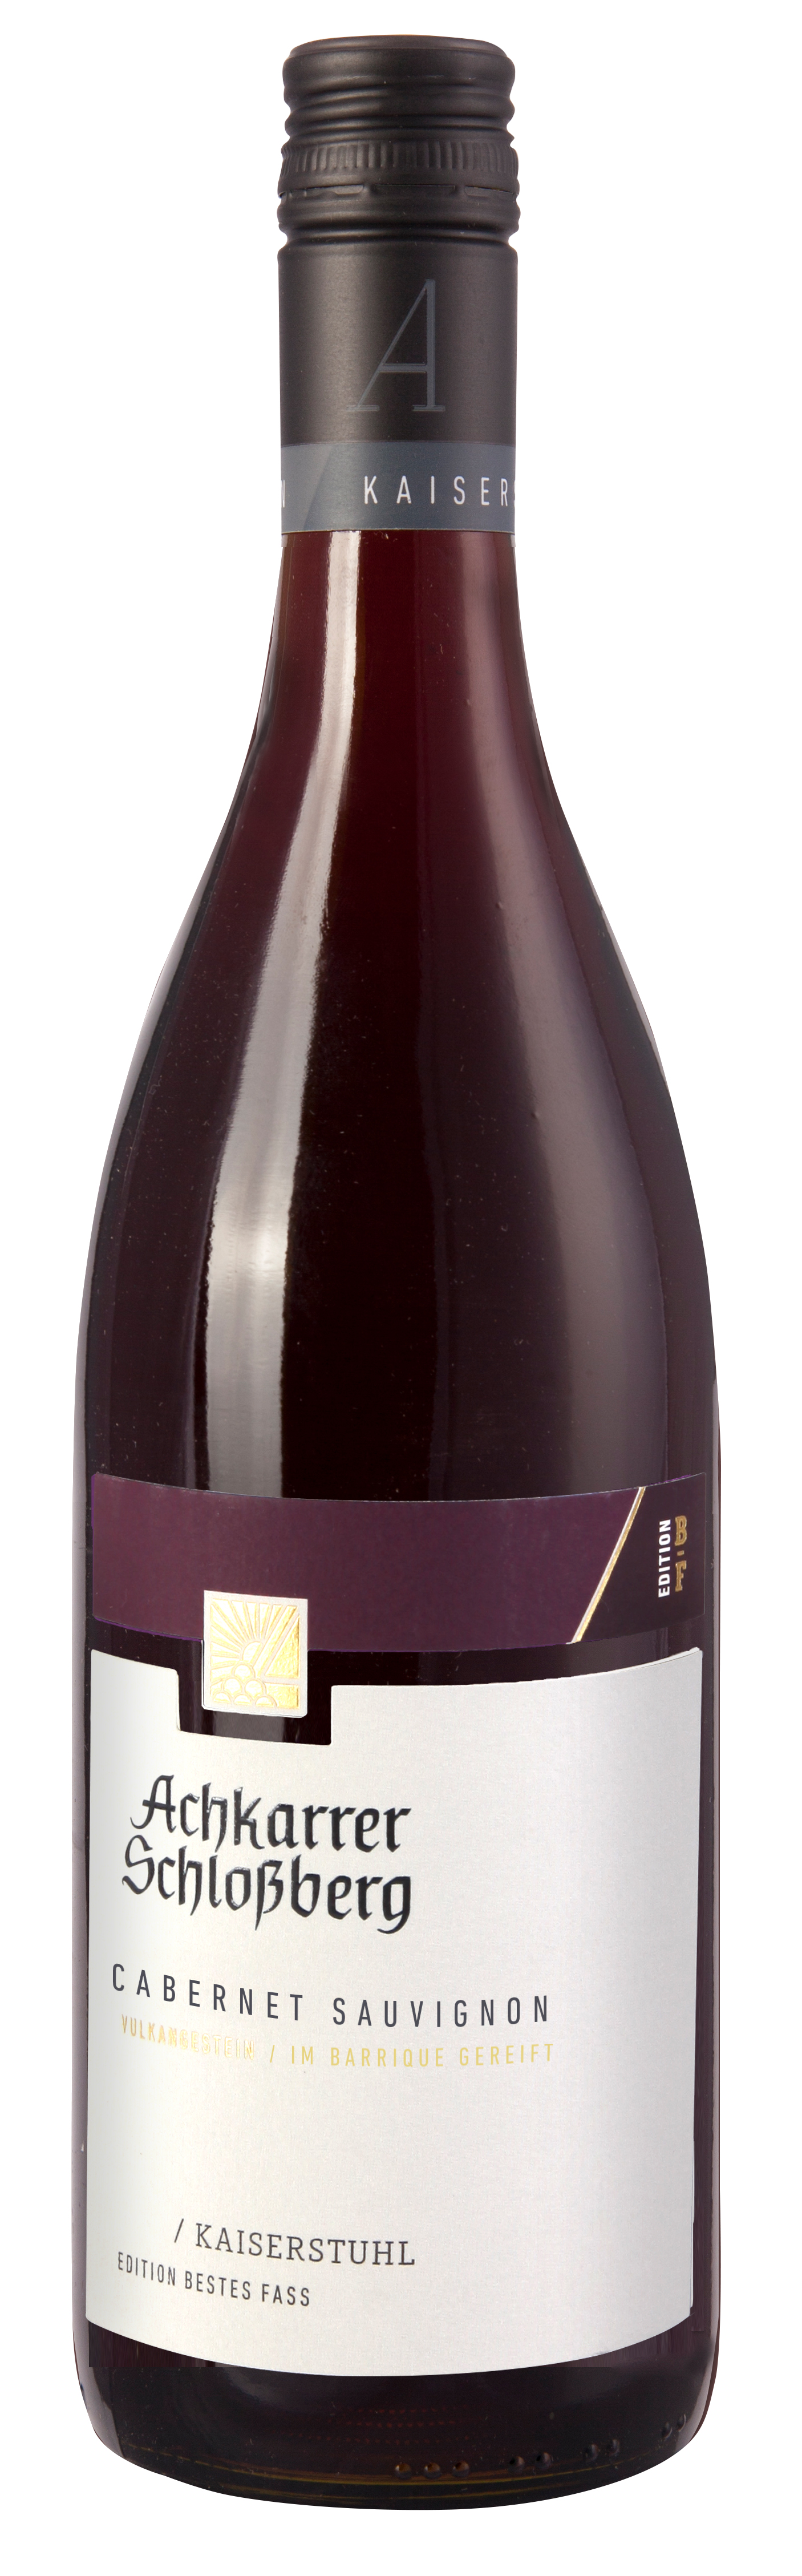 Achkarrer Schlossberg  - BESTES FASS - Cabernet Sauvignon Qualitätswein